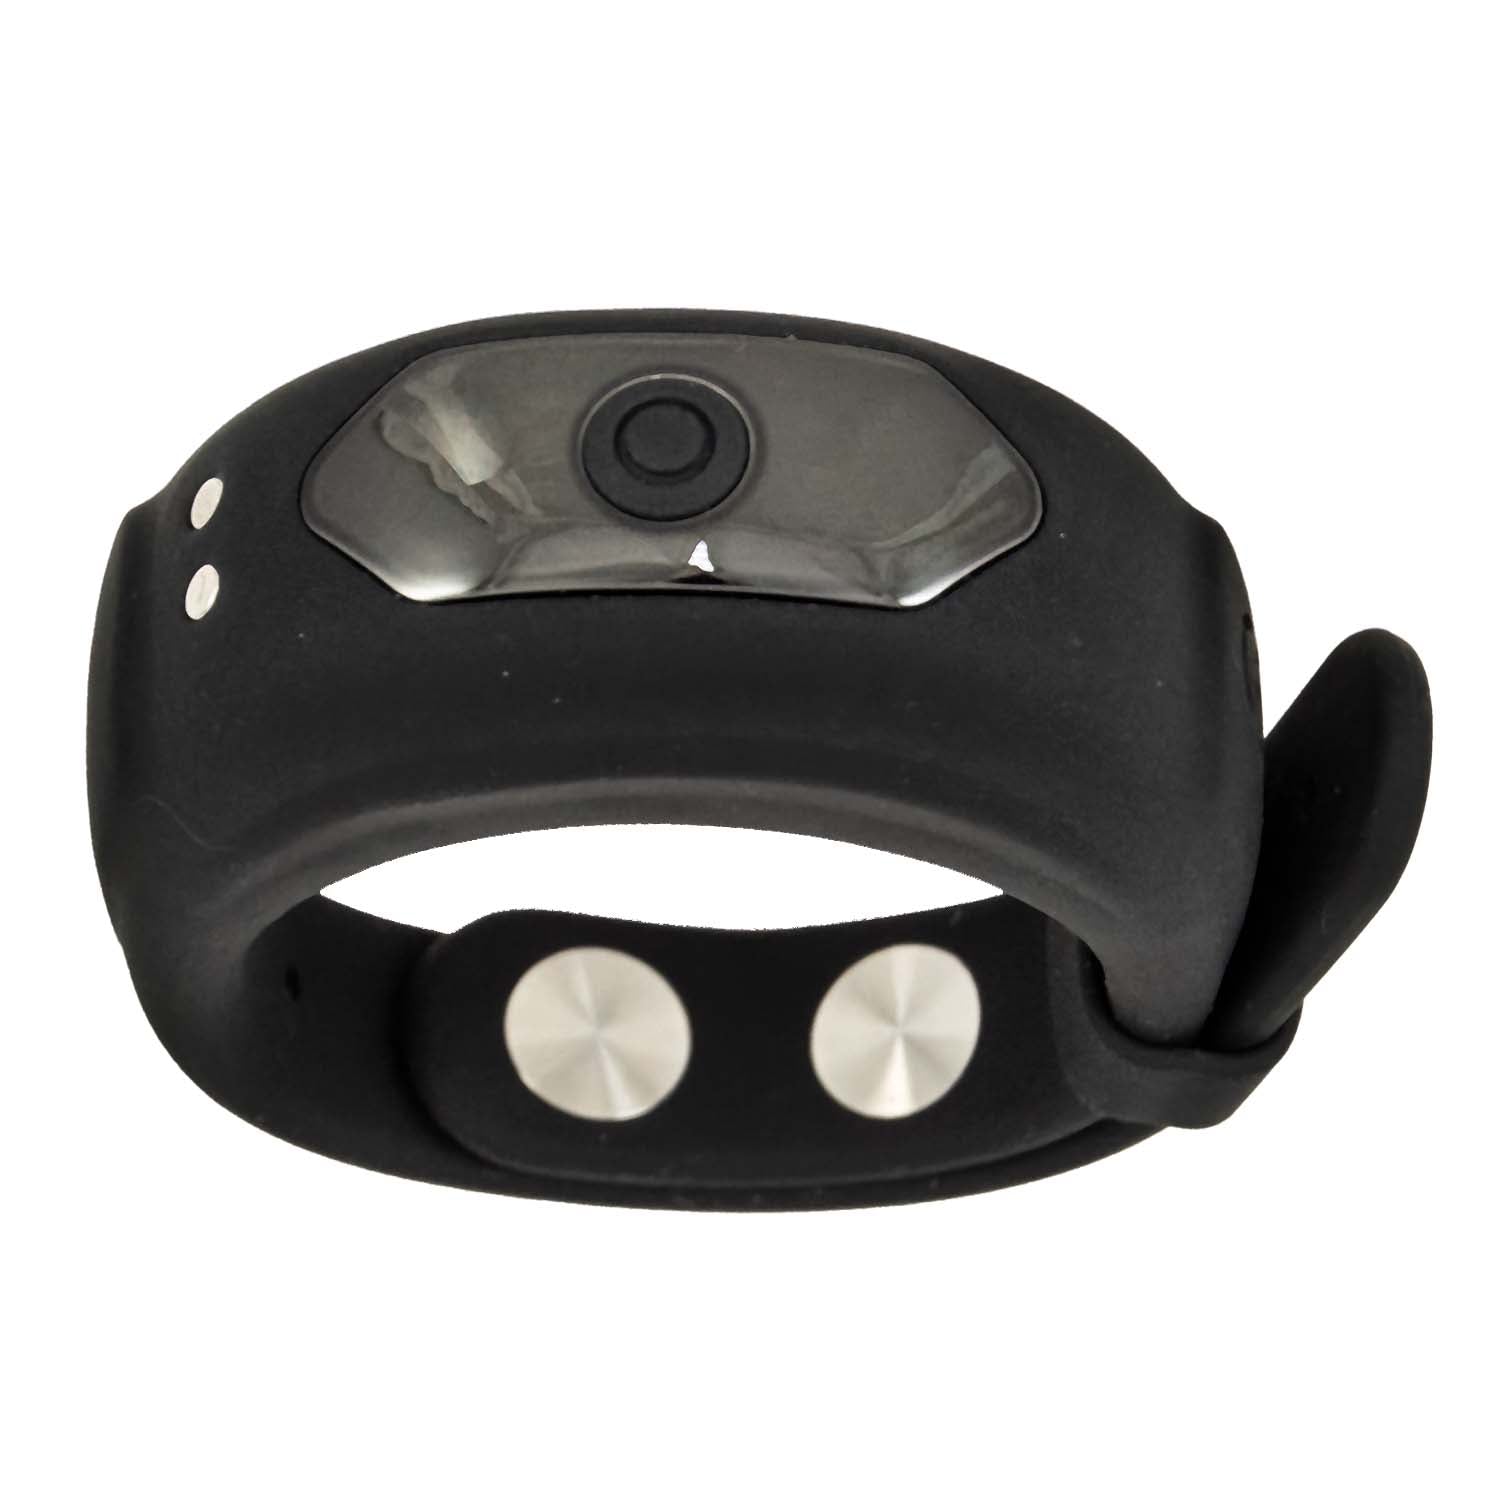 COCKPOWER Adjustable Belt Ring - Black | CheapLubes.com